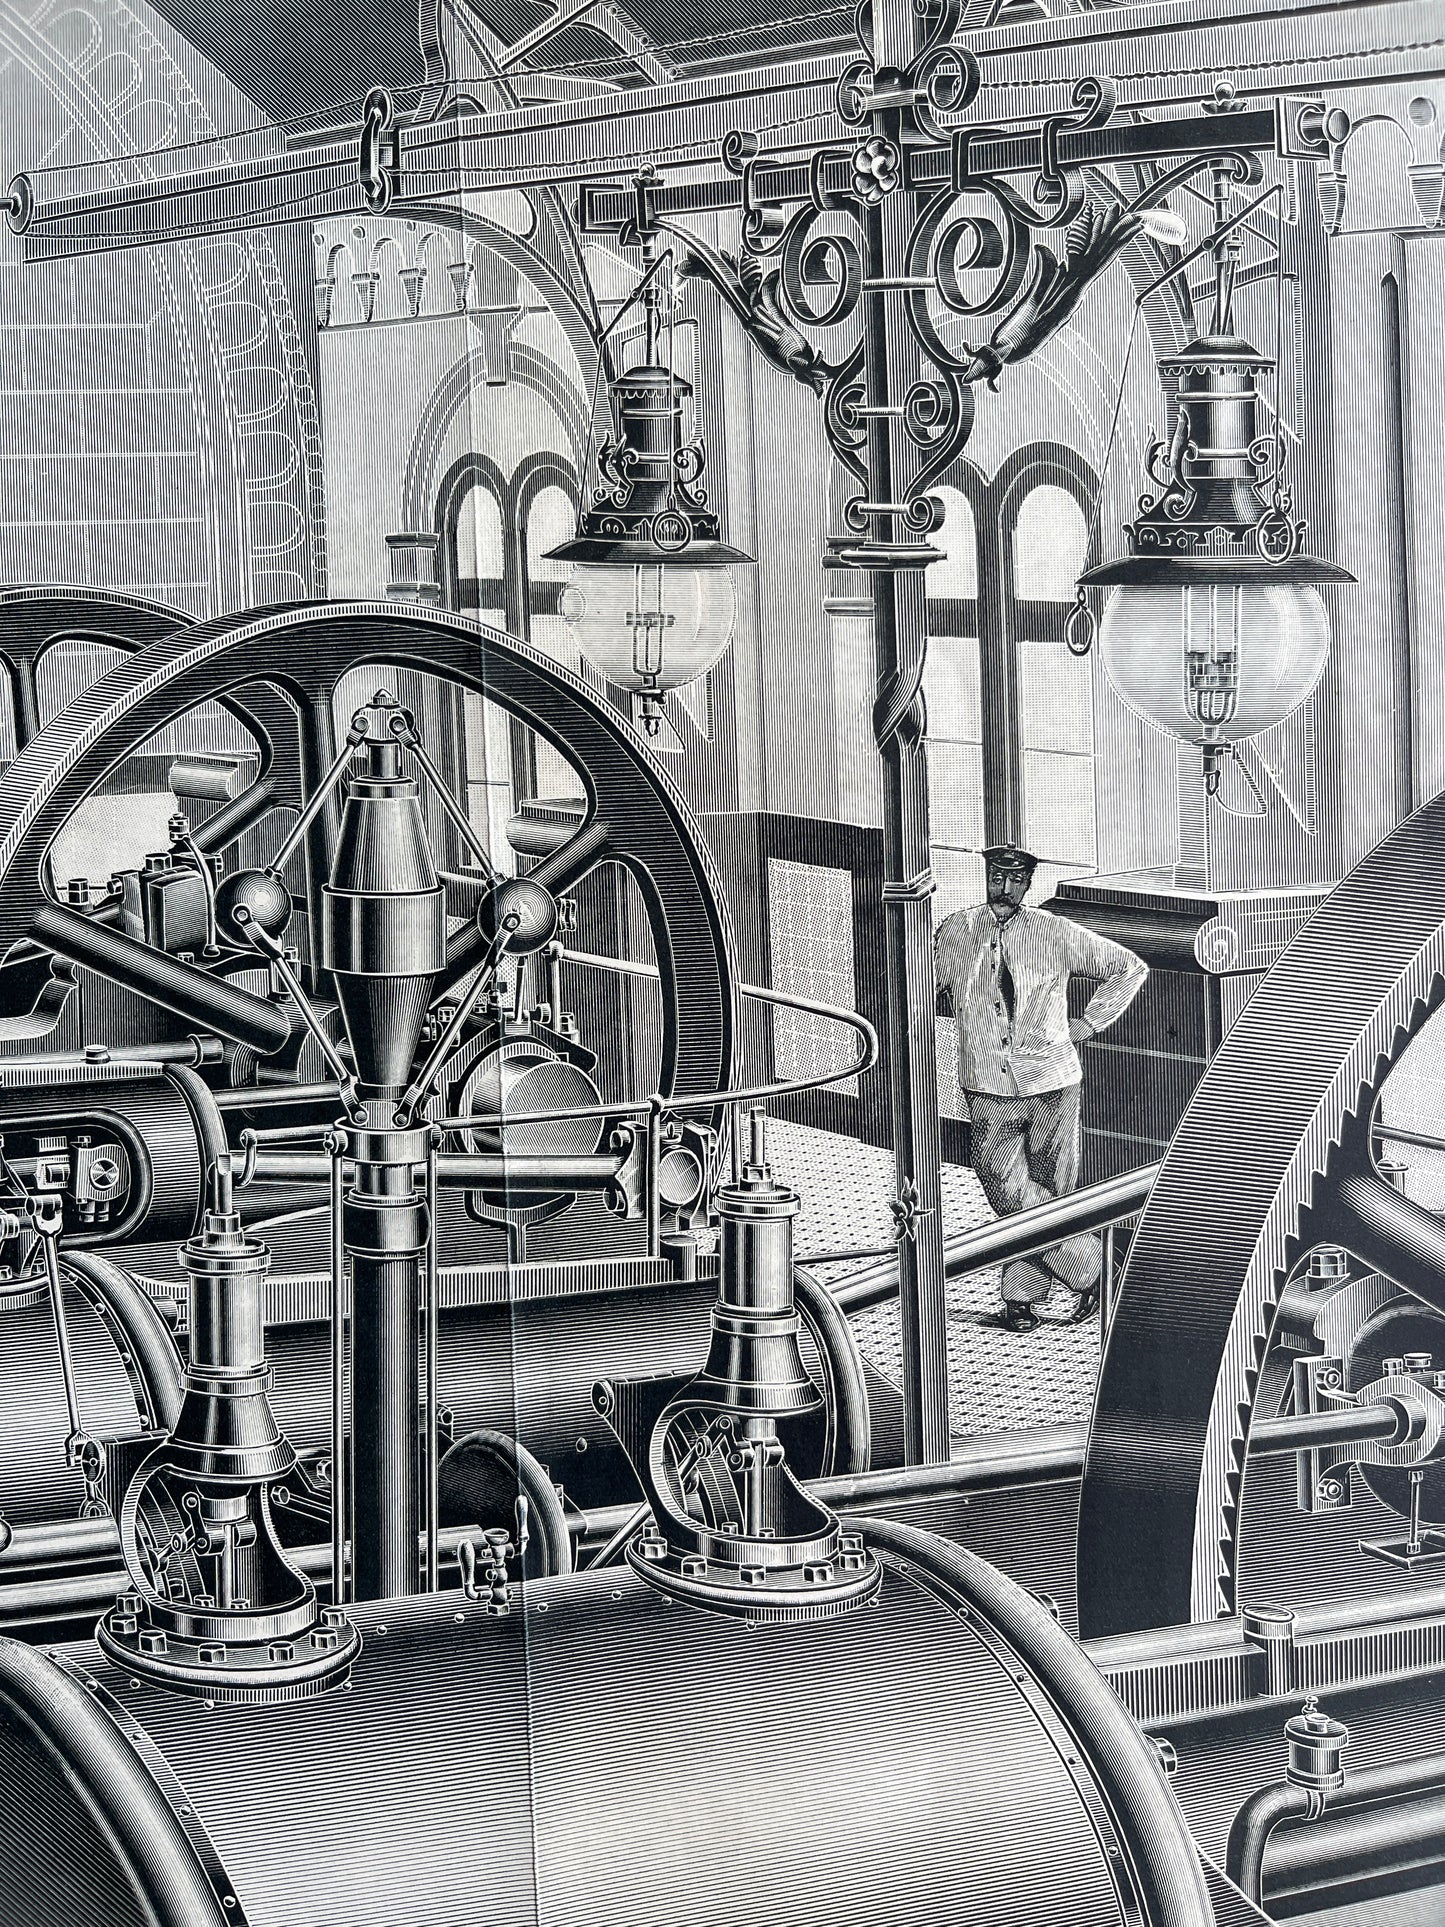 Triple-expansion pumping engines Rotterdam waterworks prent uit The Engineer uit 1897